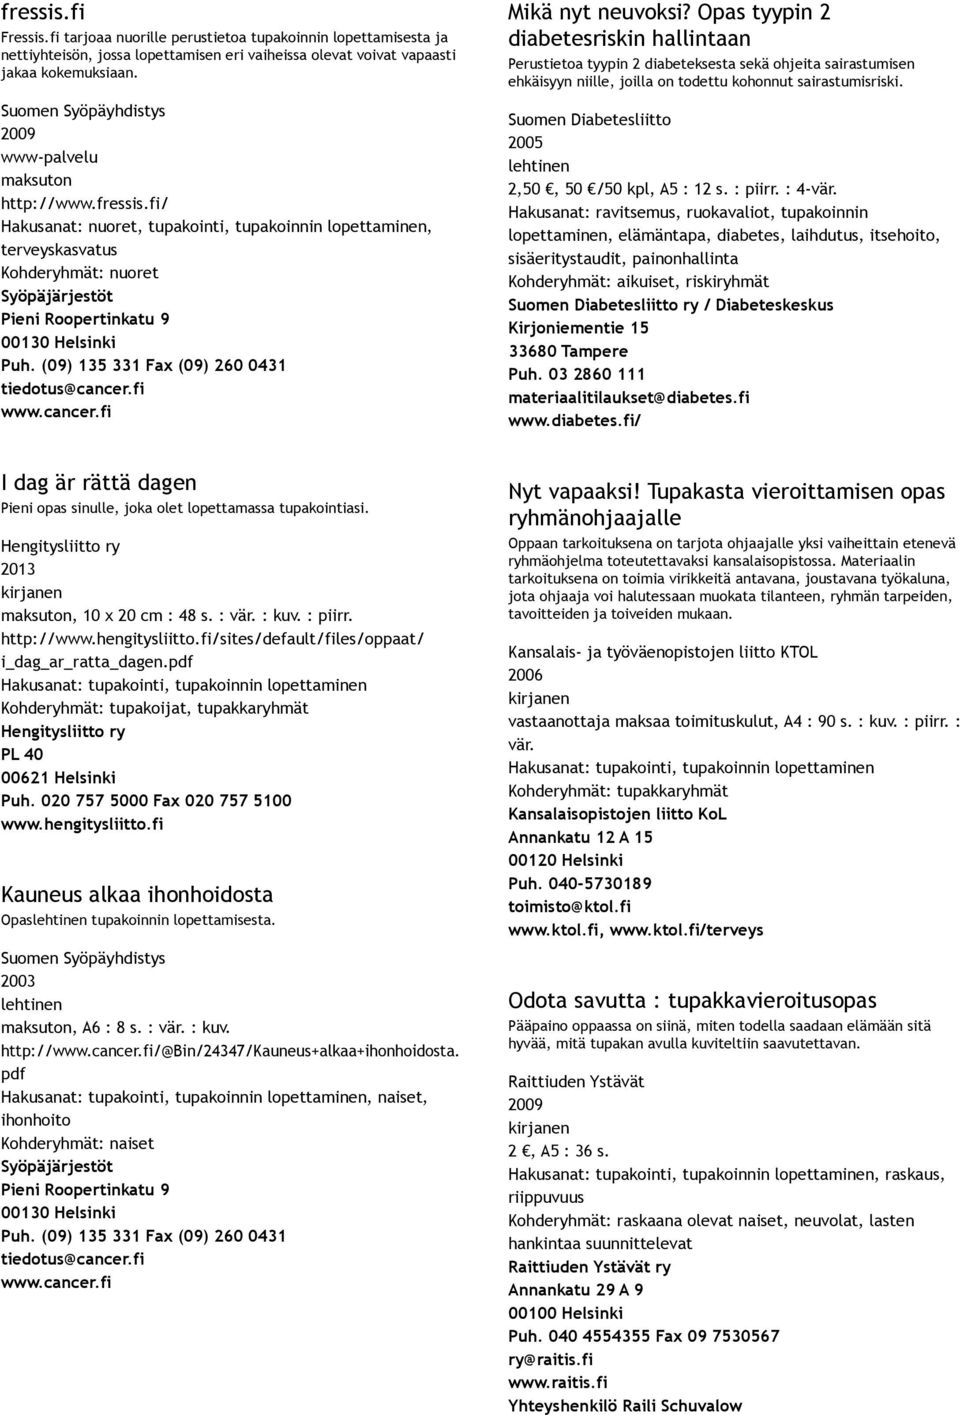 Suomen Diabetesliitto 2005 2,50, 50 /50 kpl, A5 : 12 s. : piirr. : 4 vär.